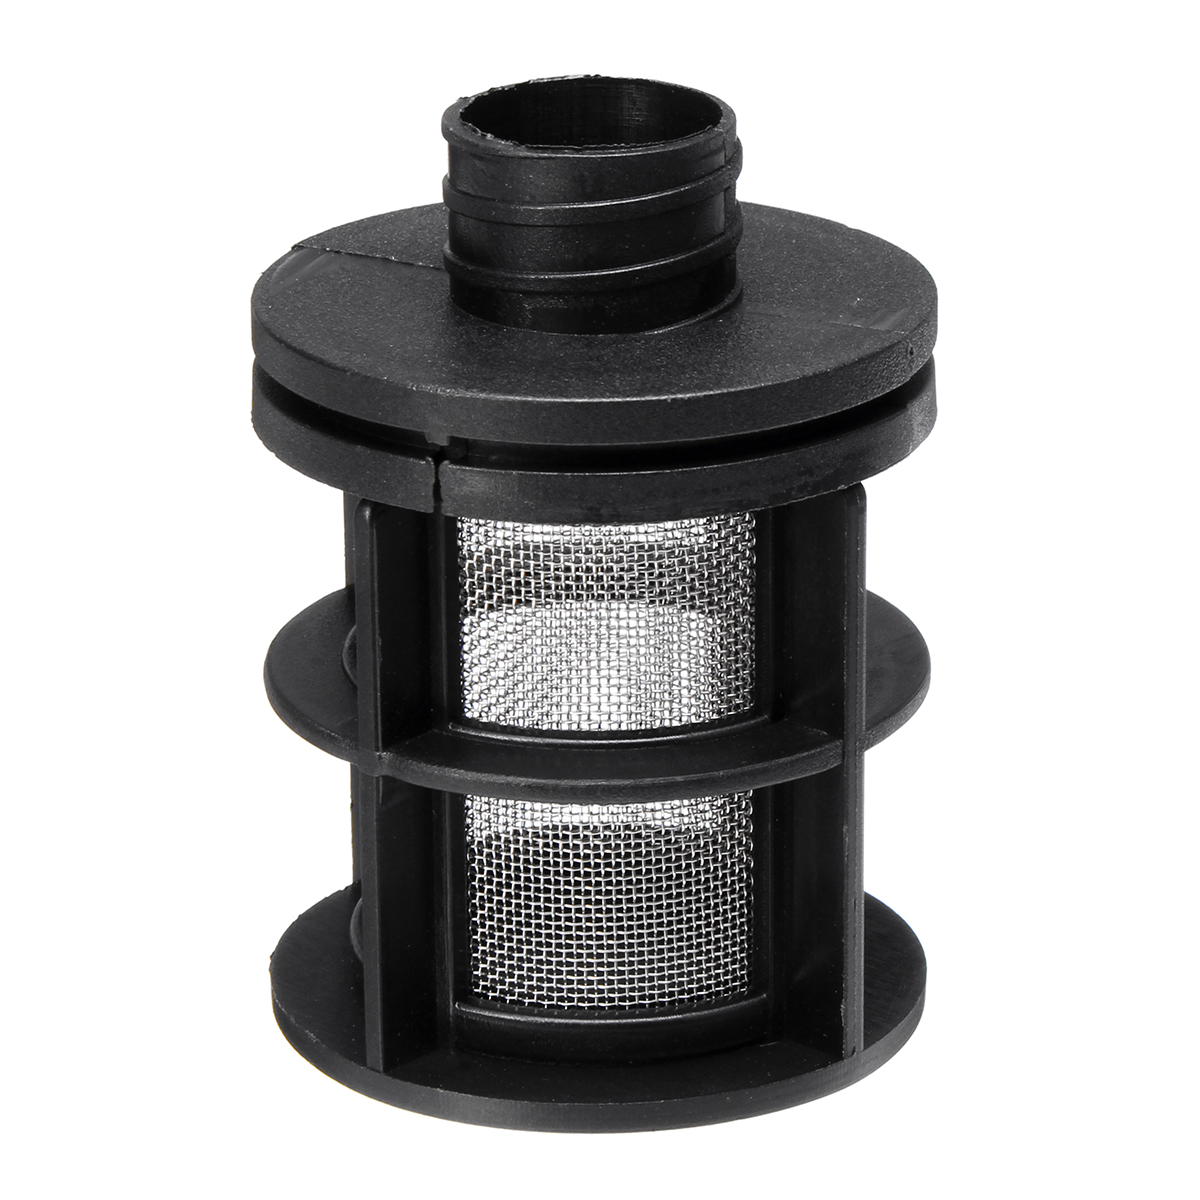 25mm-Air-Intake-Filter-Silencer-For-Dometic-Eberspacher-Webasto-Diesel-Heater-1409798-7